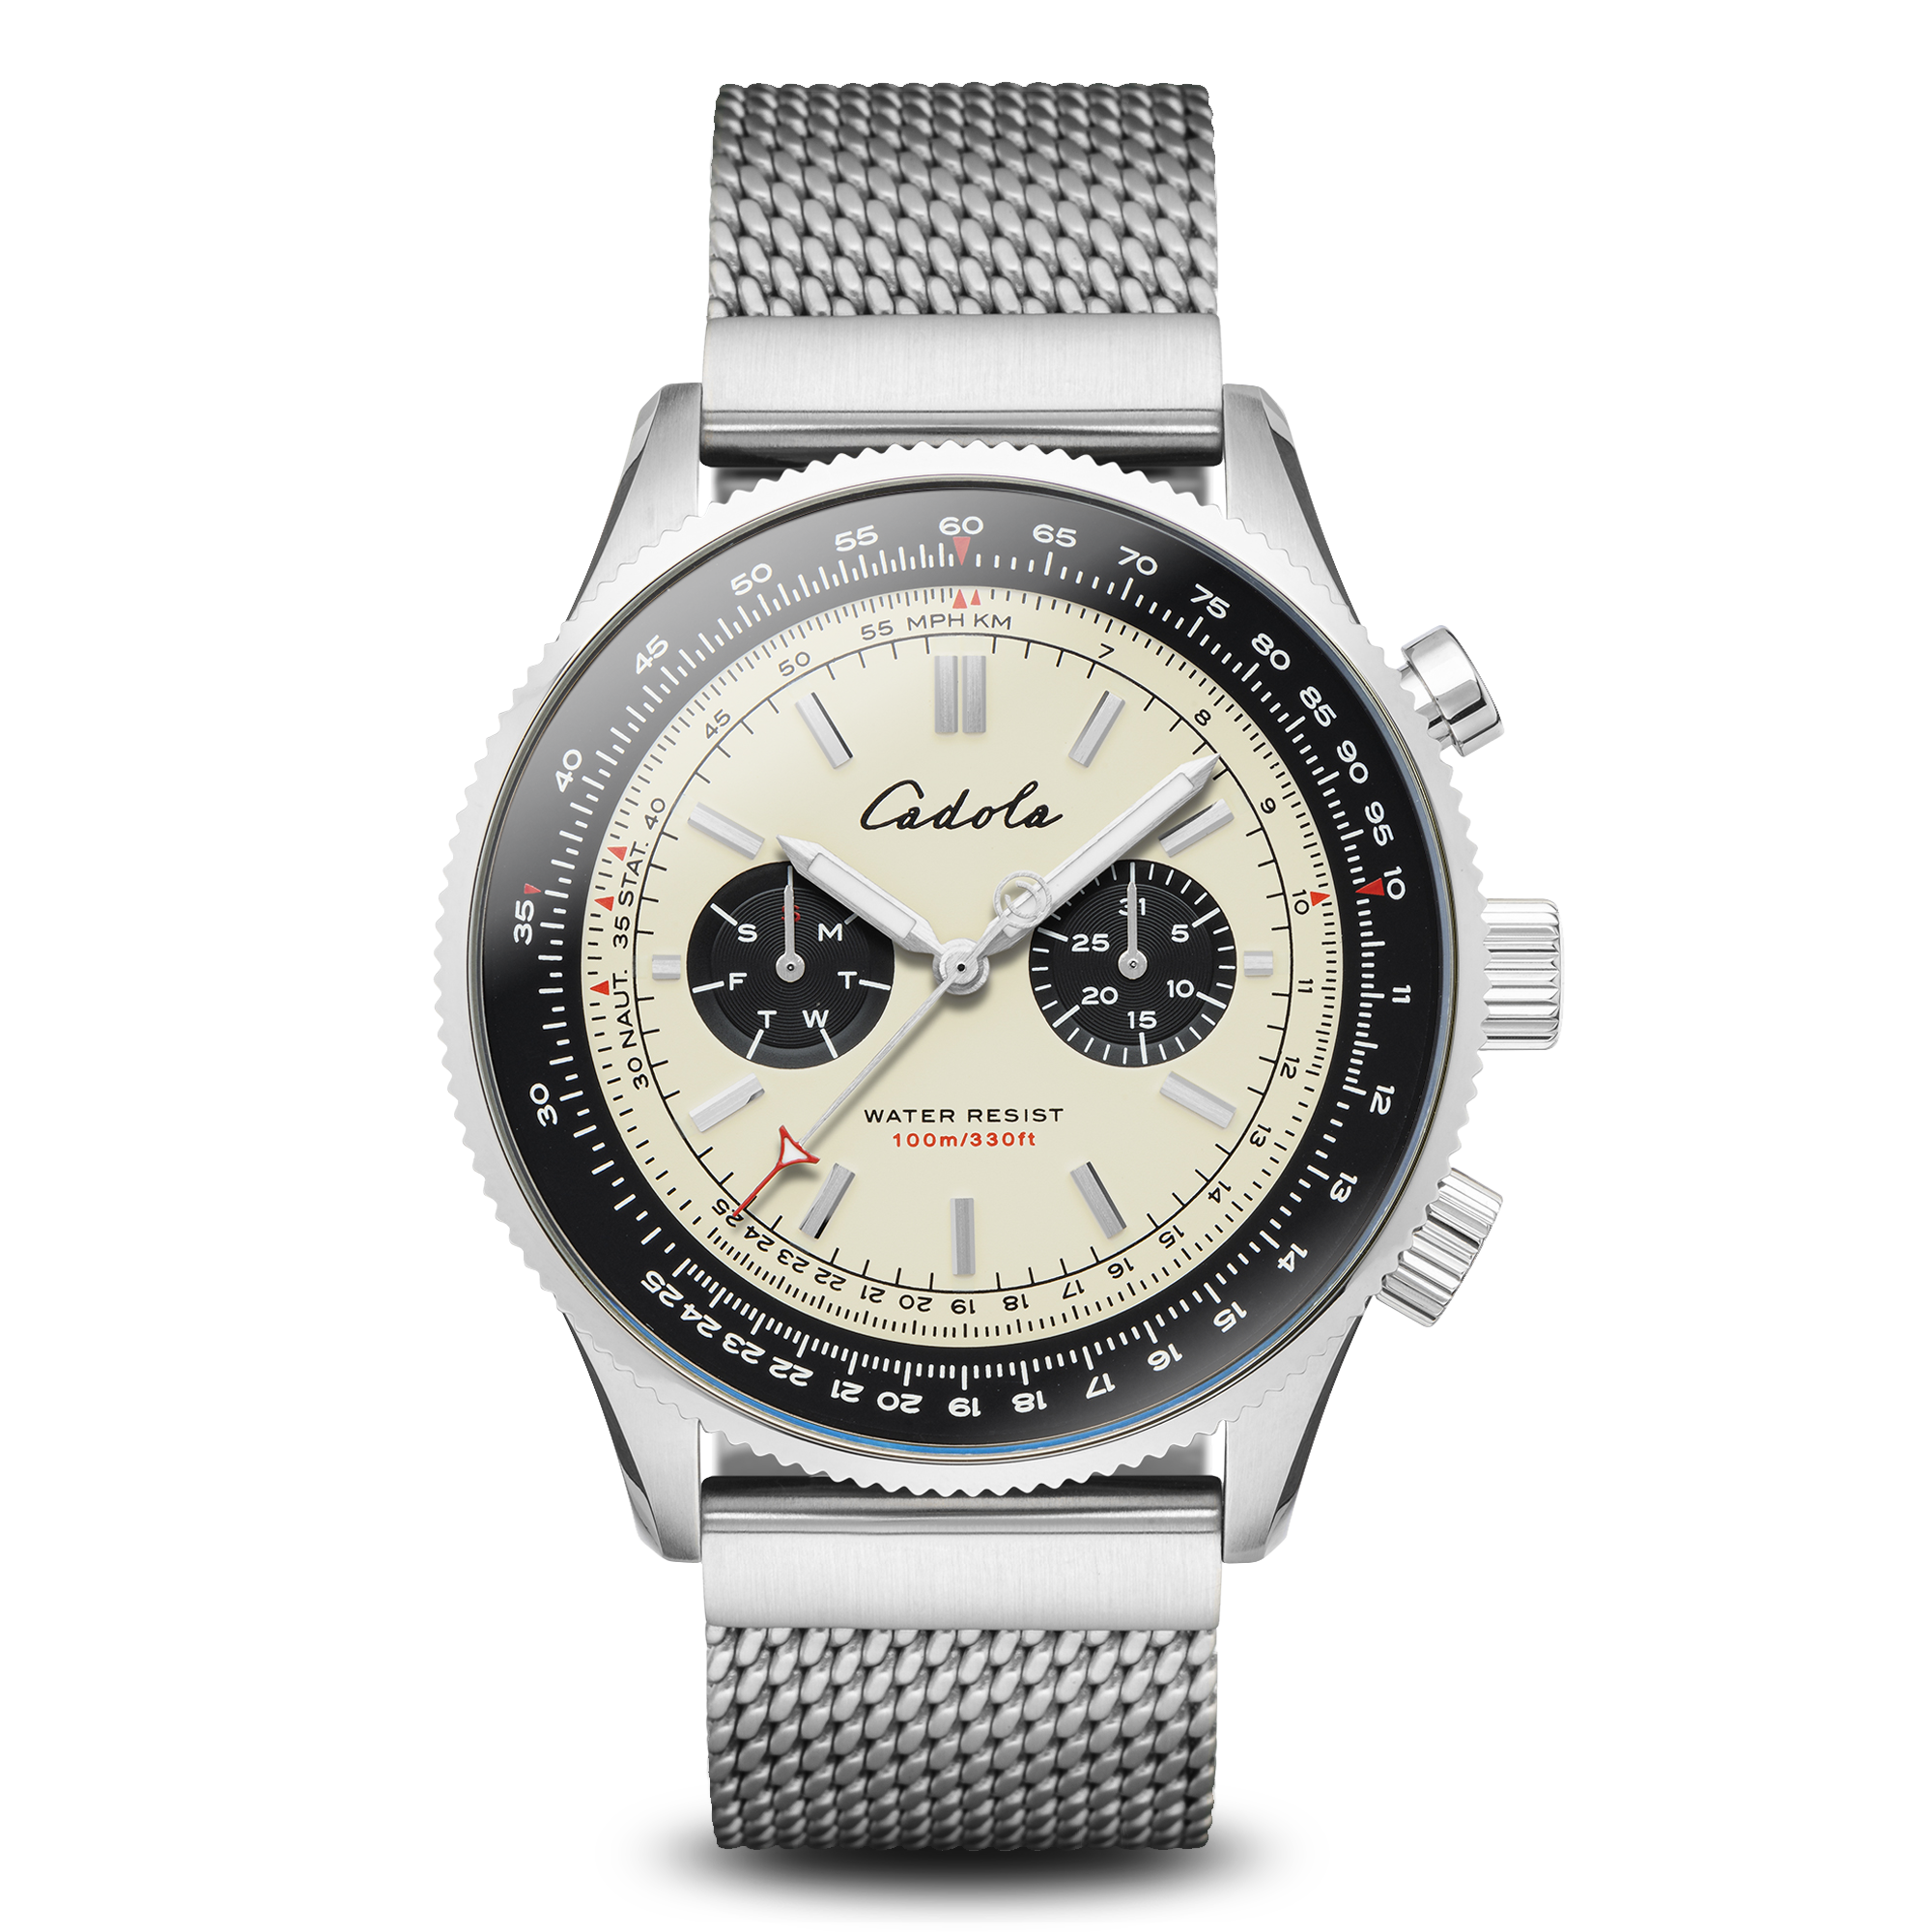 CADOLA Cadola Aviateur Men's Swiss Parts Quartz Cream Steel Watch CD-1007-44